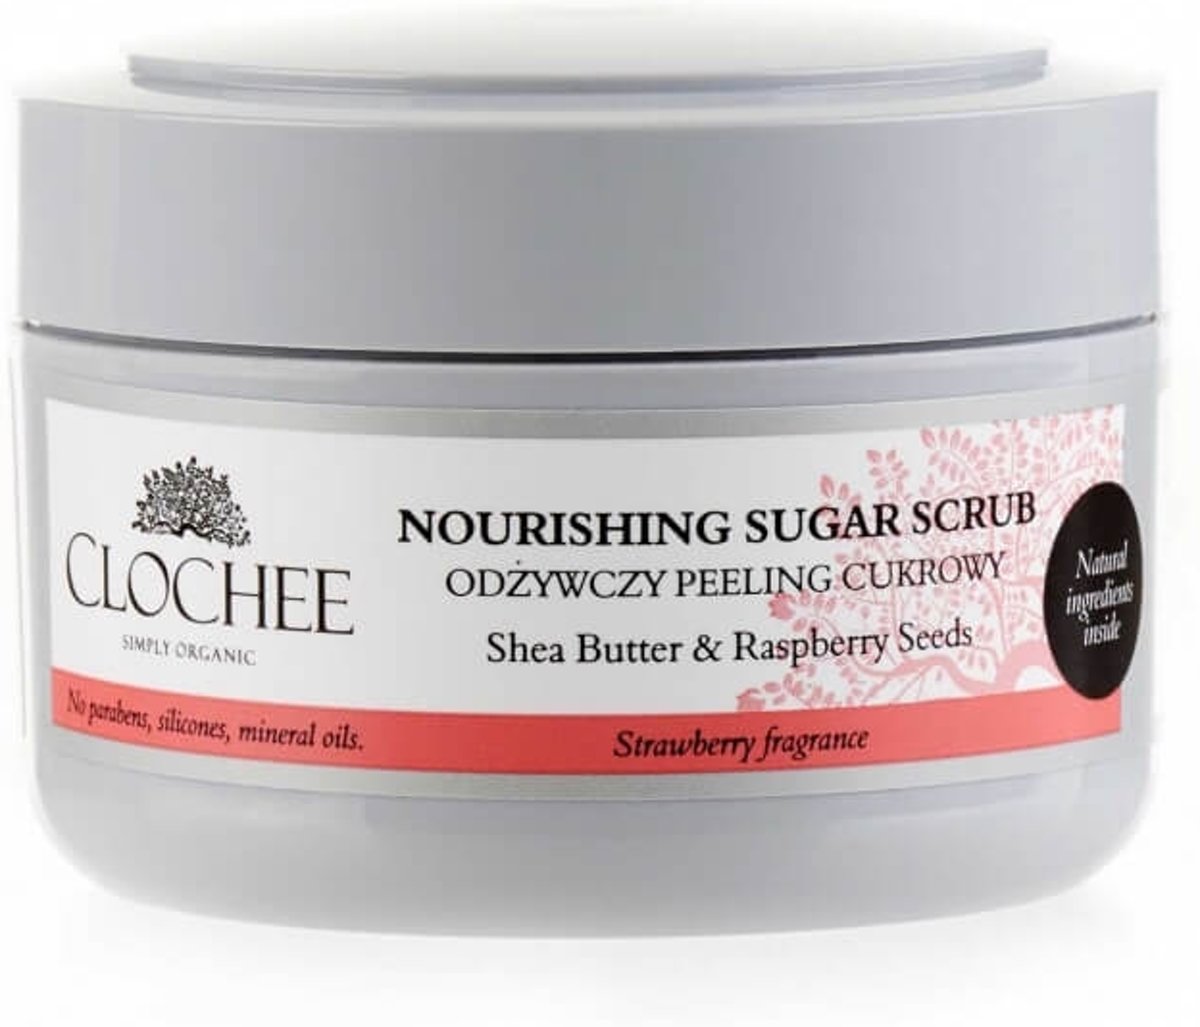 Foto van Clochee Cosmetics nourishing sugar scrub Strawberry 250g.